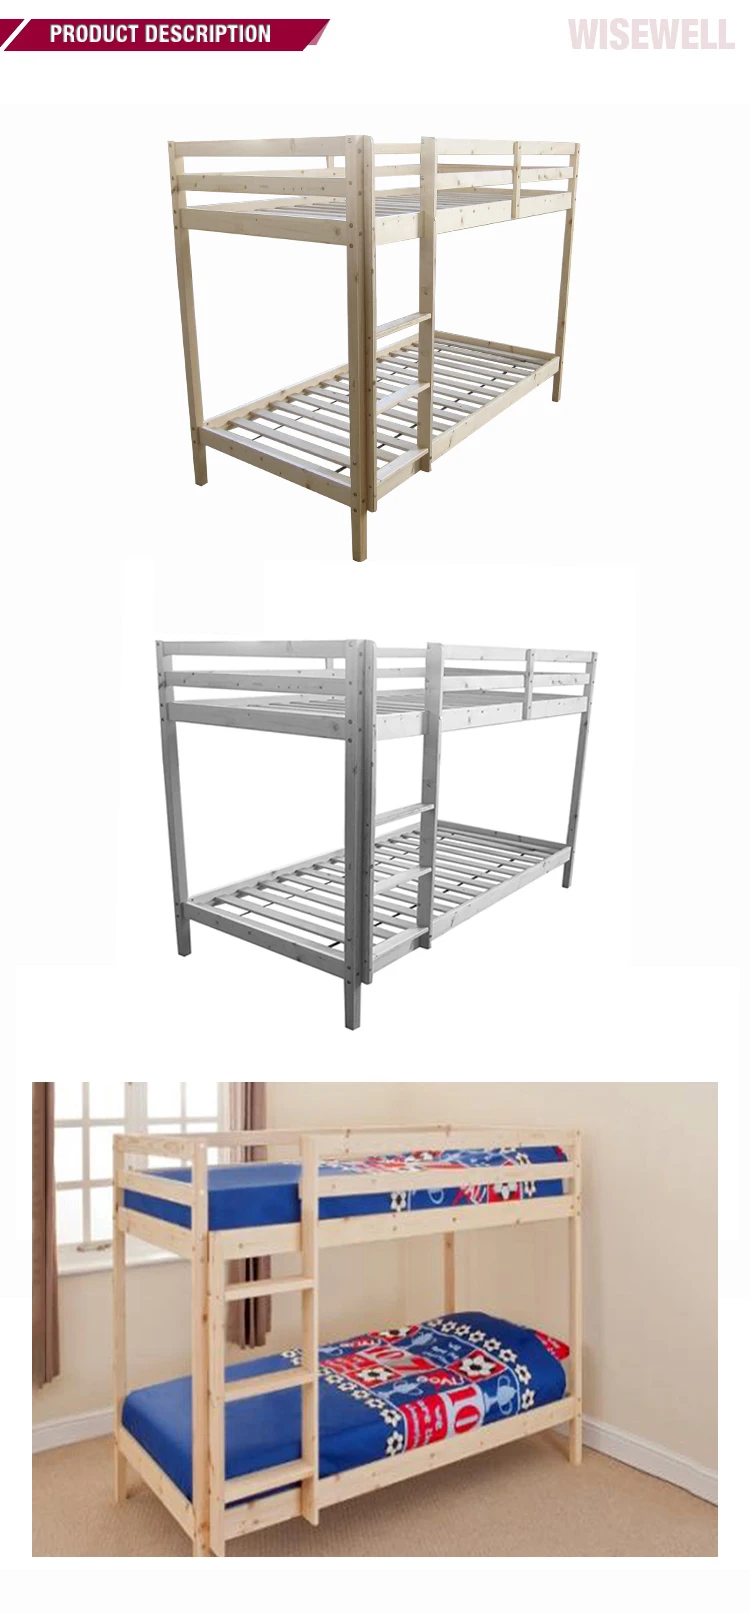 W-B-3508 natural pine wood cheap bunk bed frame